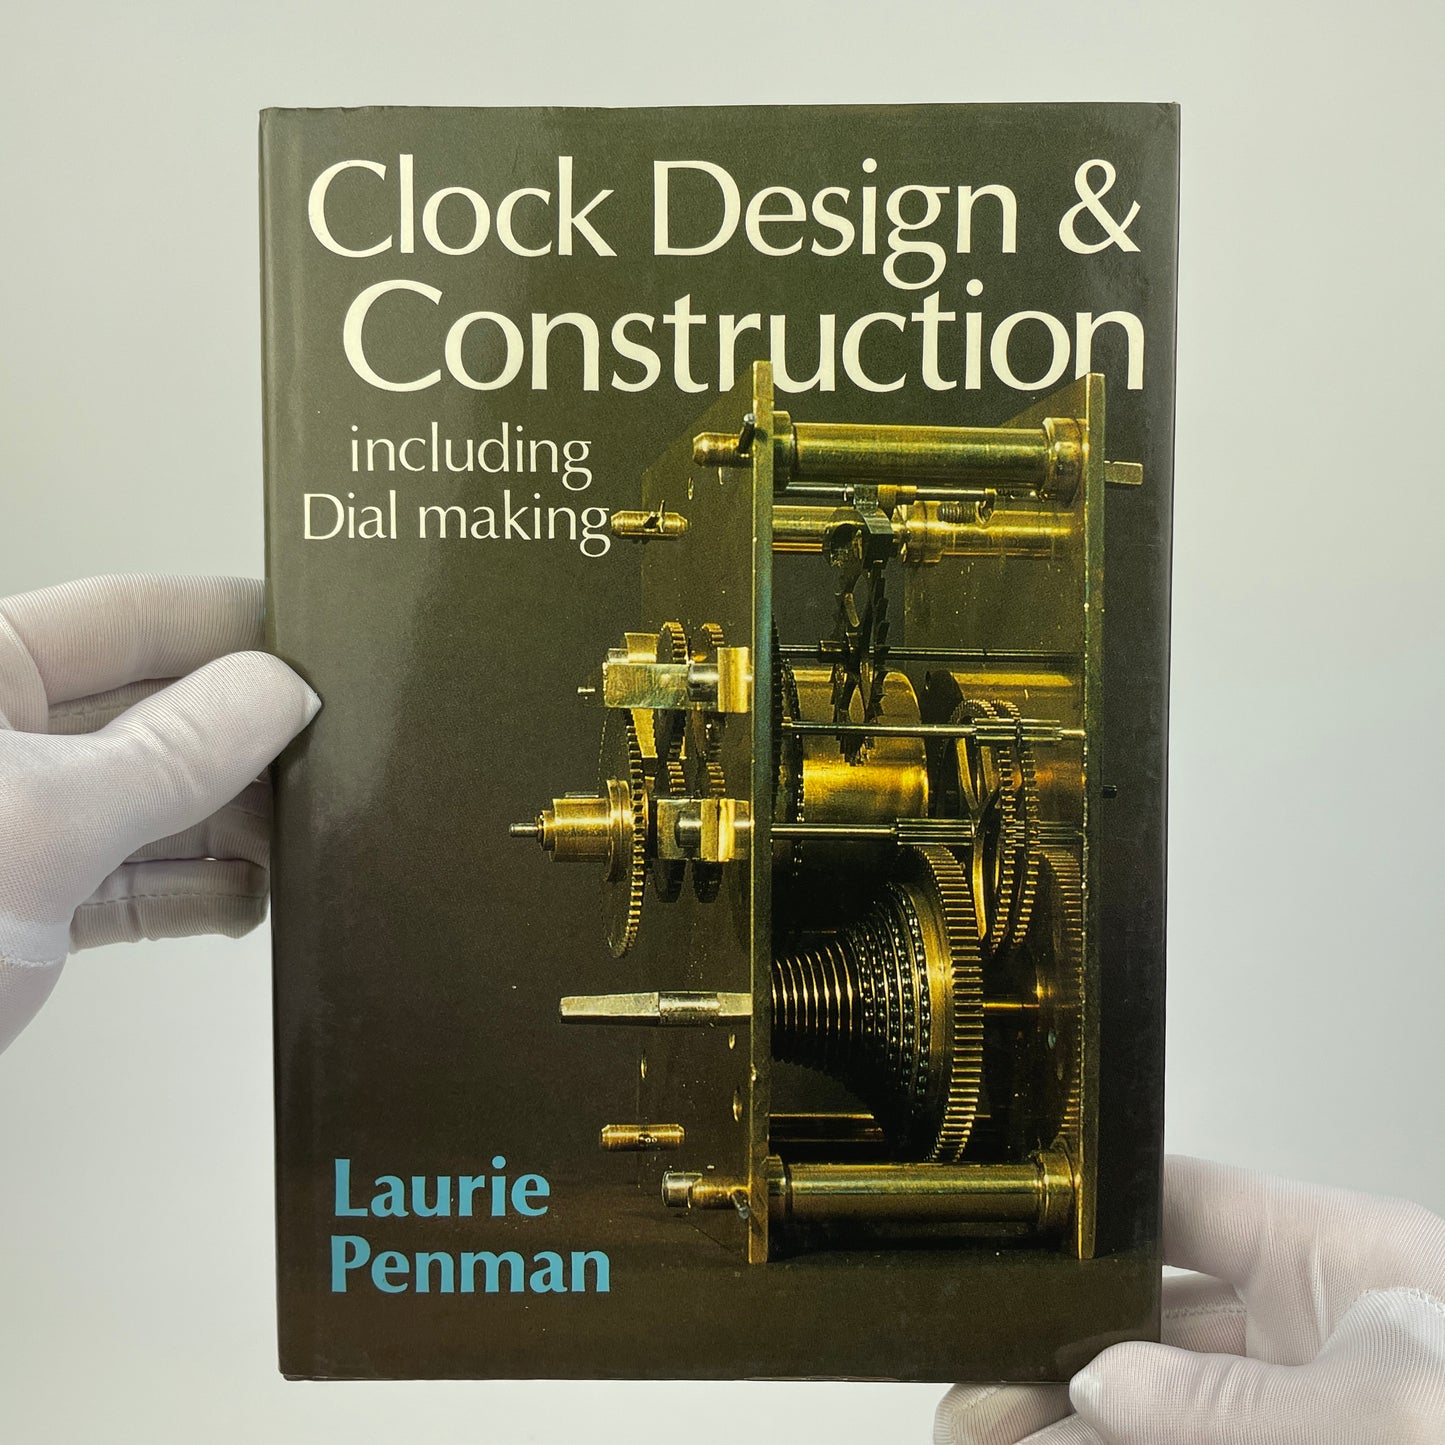 Clock Design & Construction